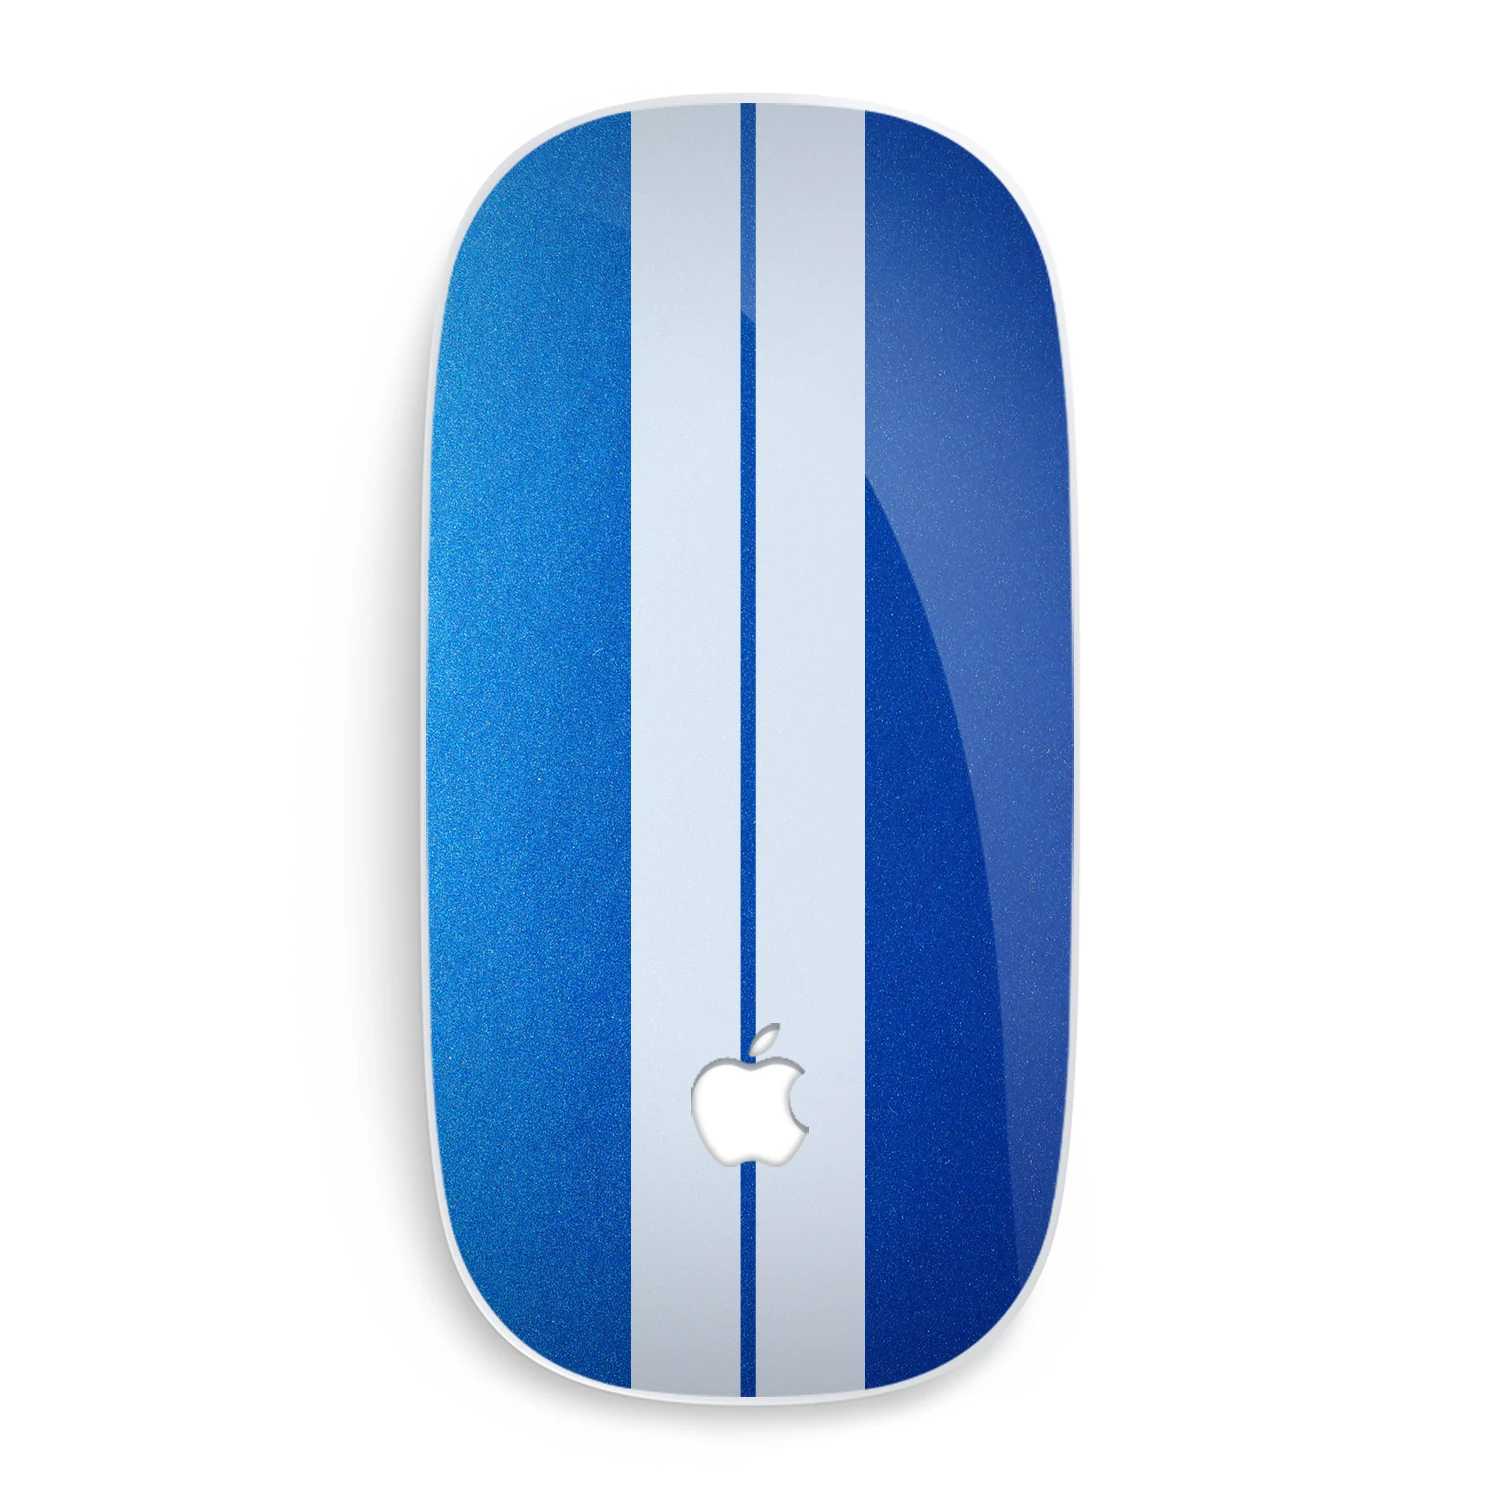 Apple Magic Mouse 1/2 Kaplama Uzay Mavisi Çift Beyaz Şerit